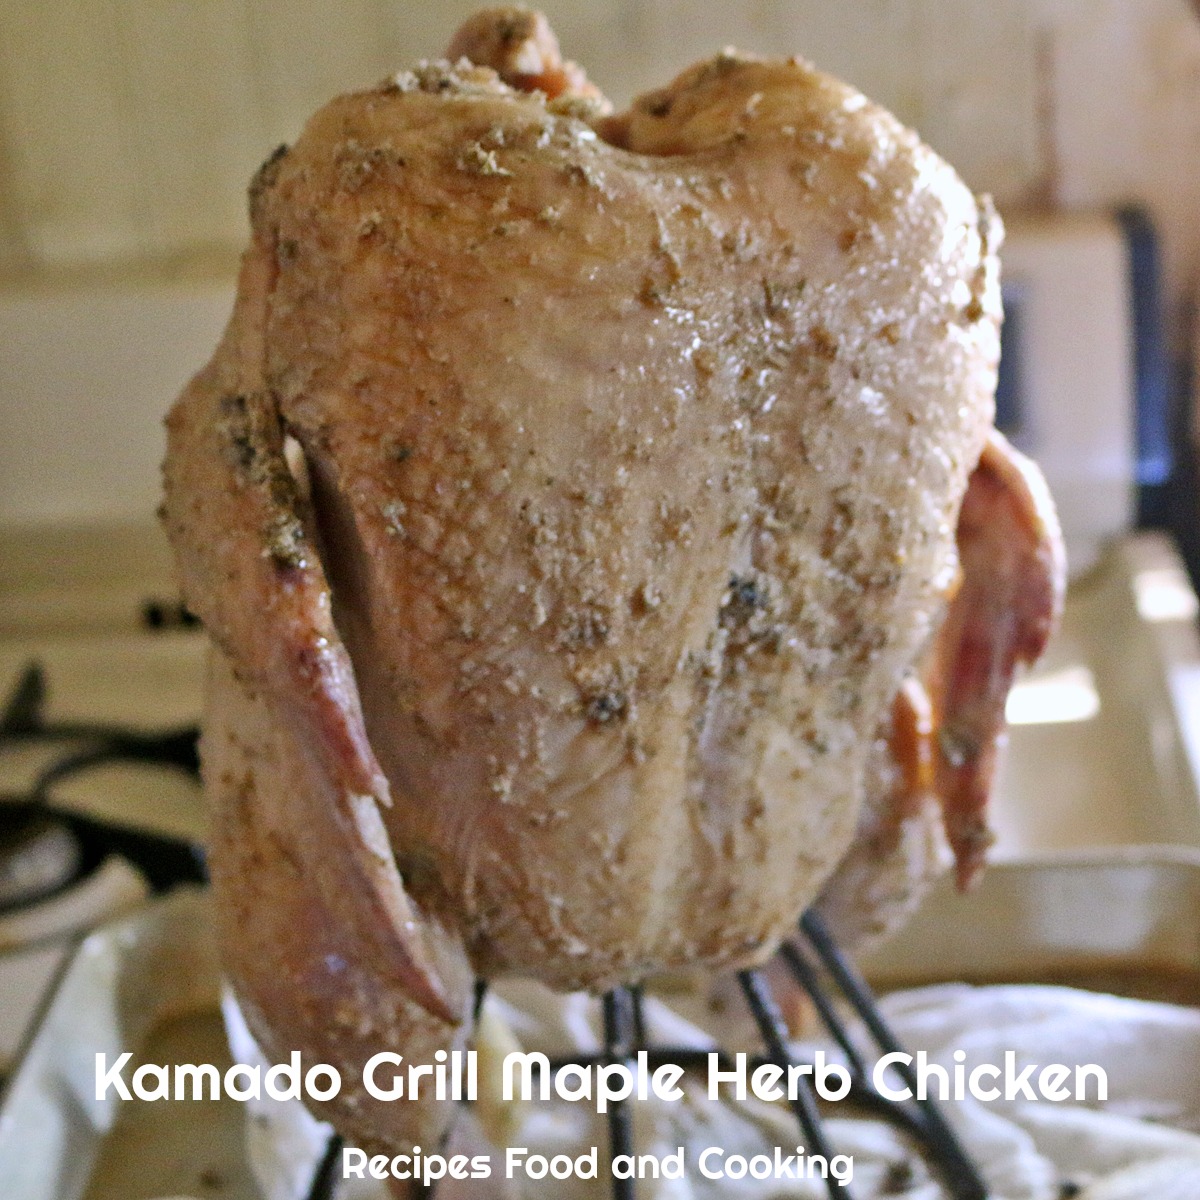 Kamado Grill Maple Herb Chicken